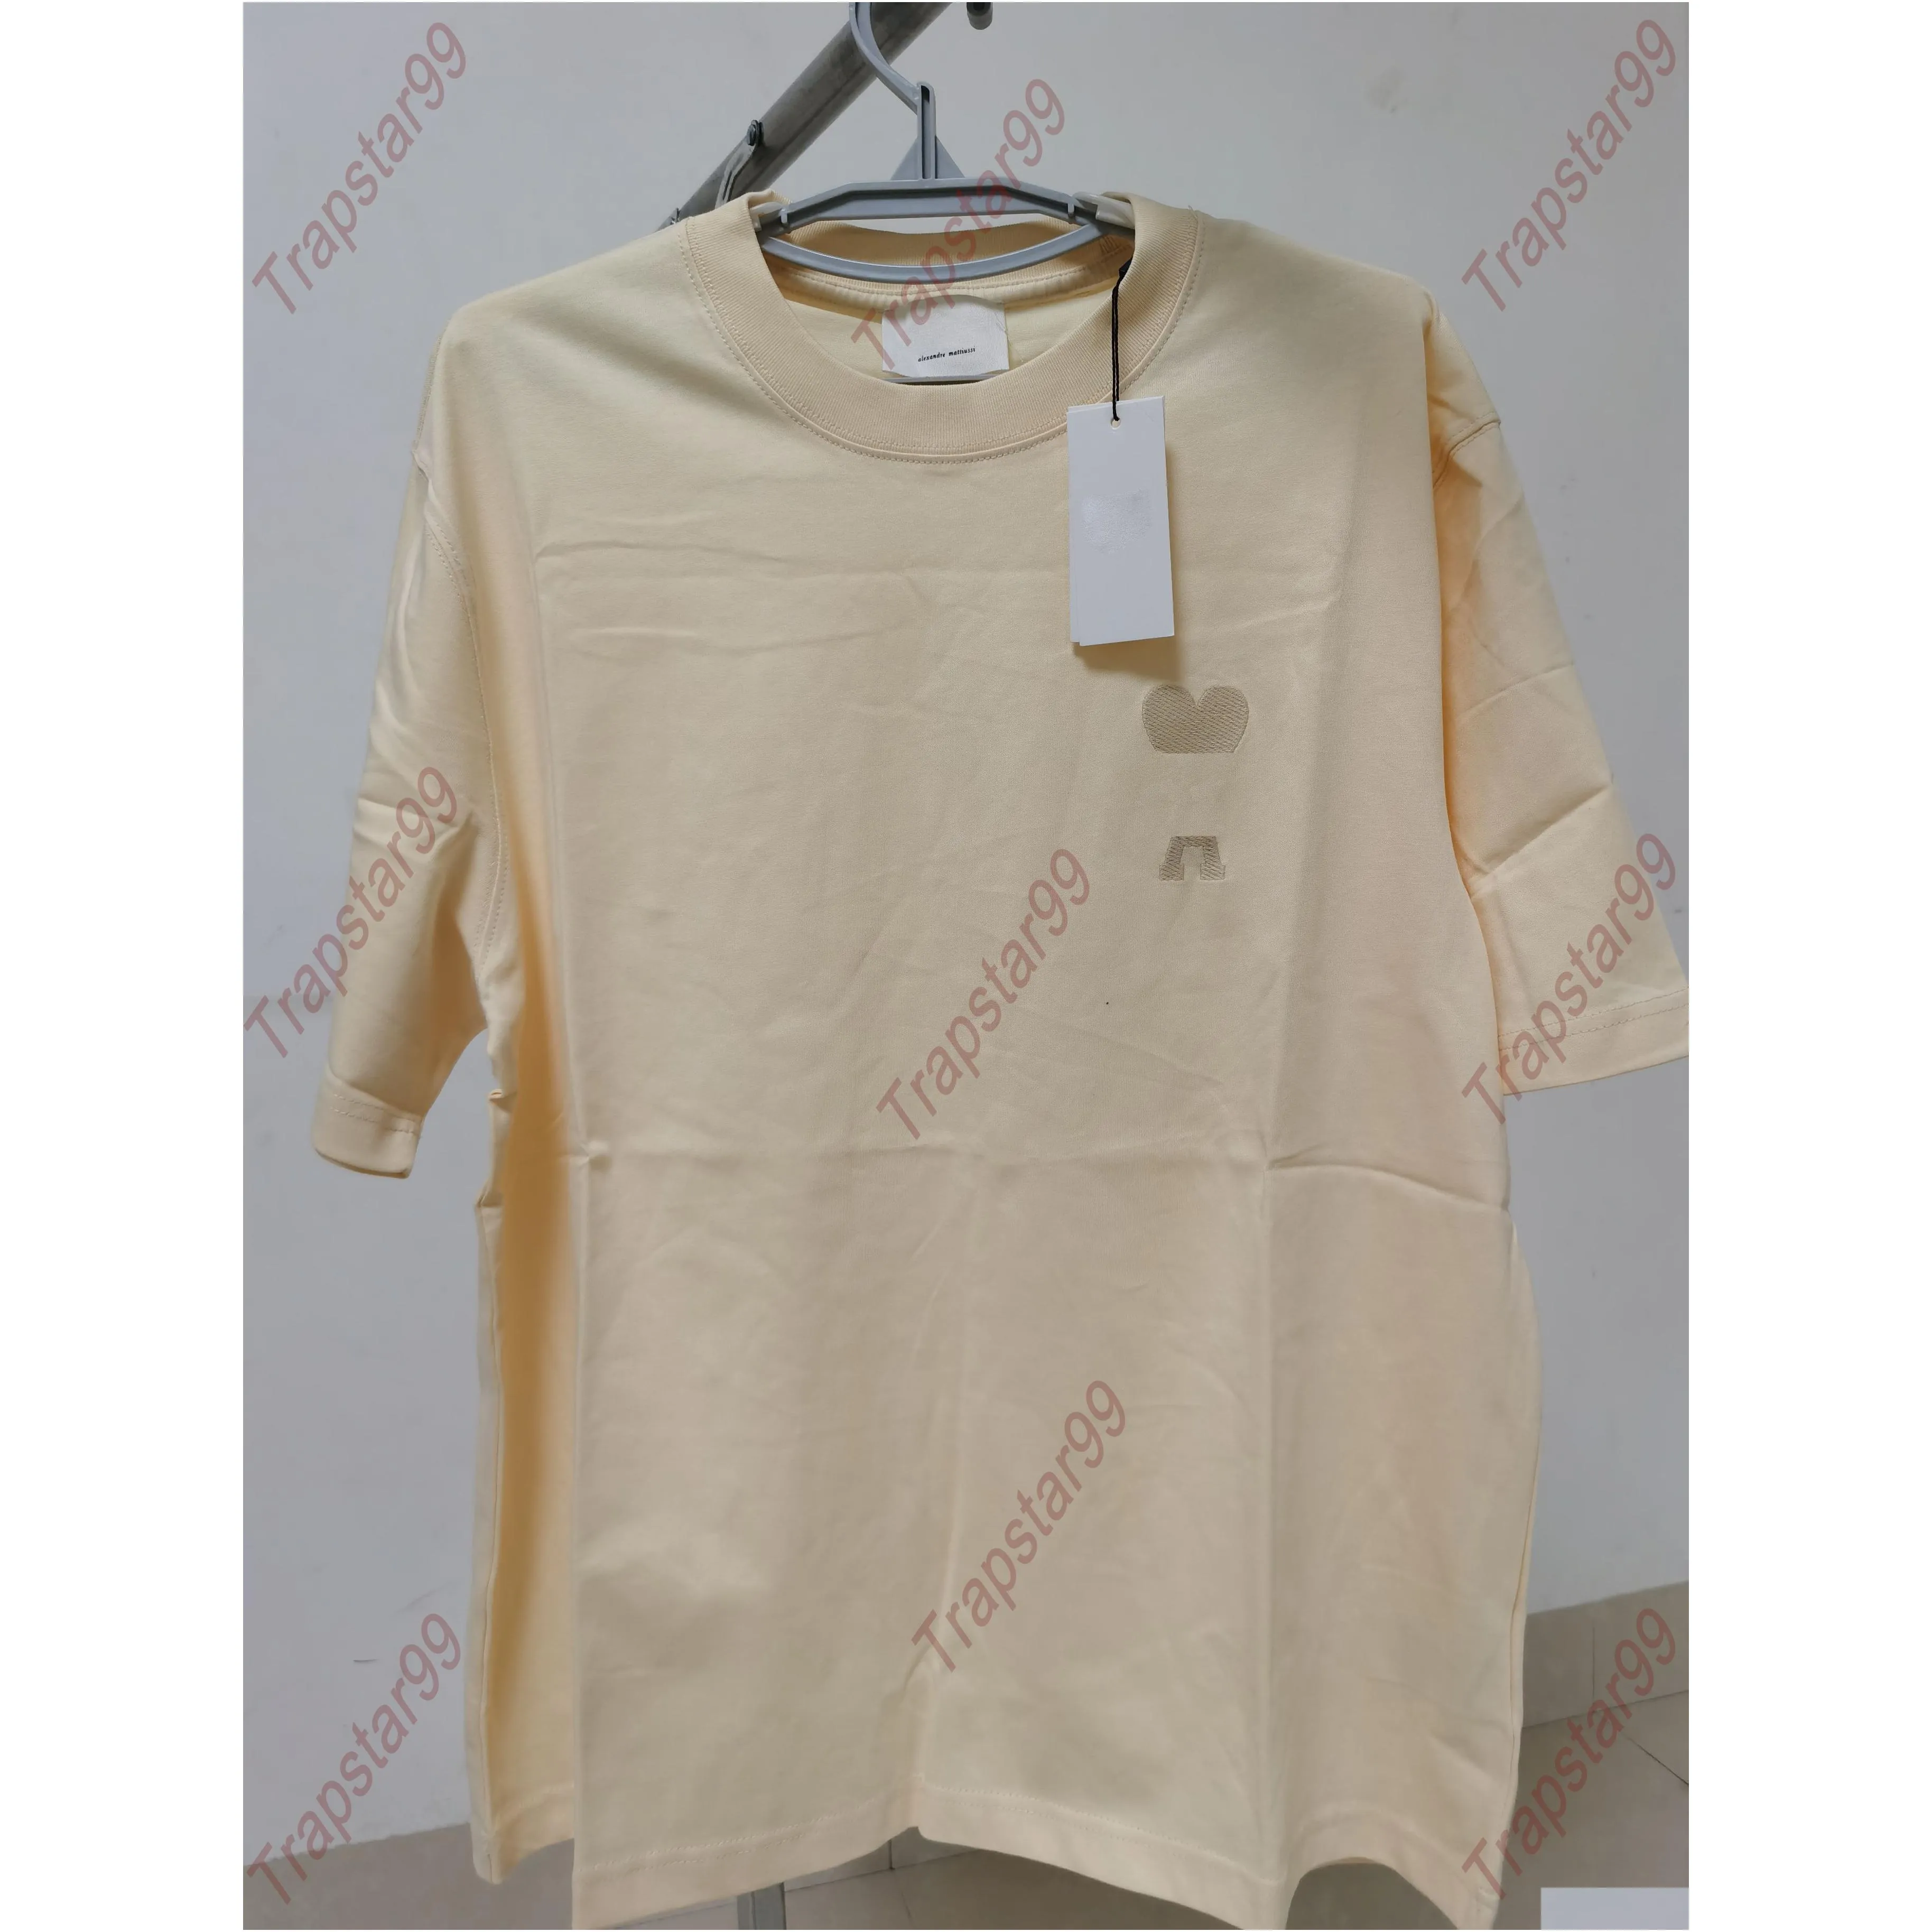 Amis Mens Womens Designer T Shirt Summer Tee Shirts Fashion Tops Luxurys brand Unisex style cotton Tshirt US Size S-XL